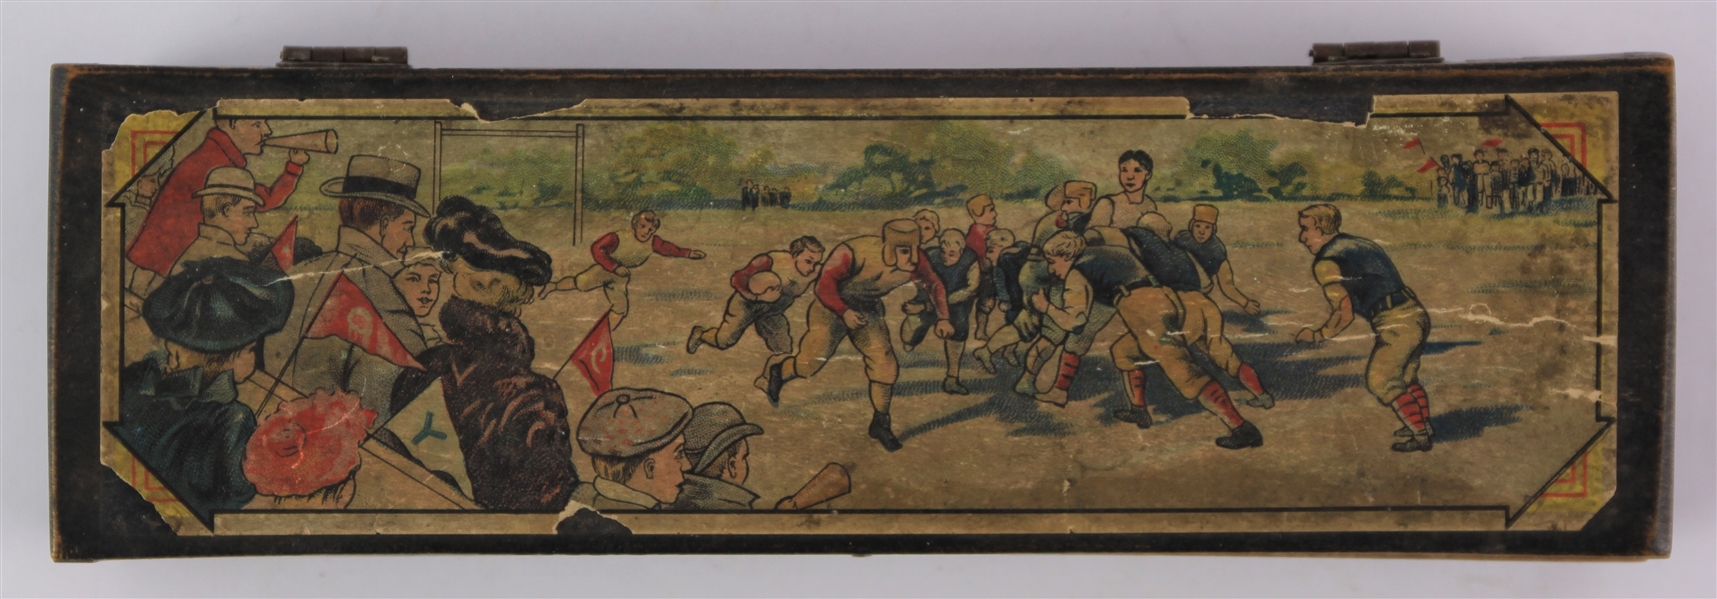 1900s Football Scene 2.25" x 8" x 1.5" Hinged Wooden Pencil Box 